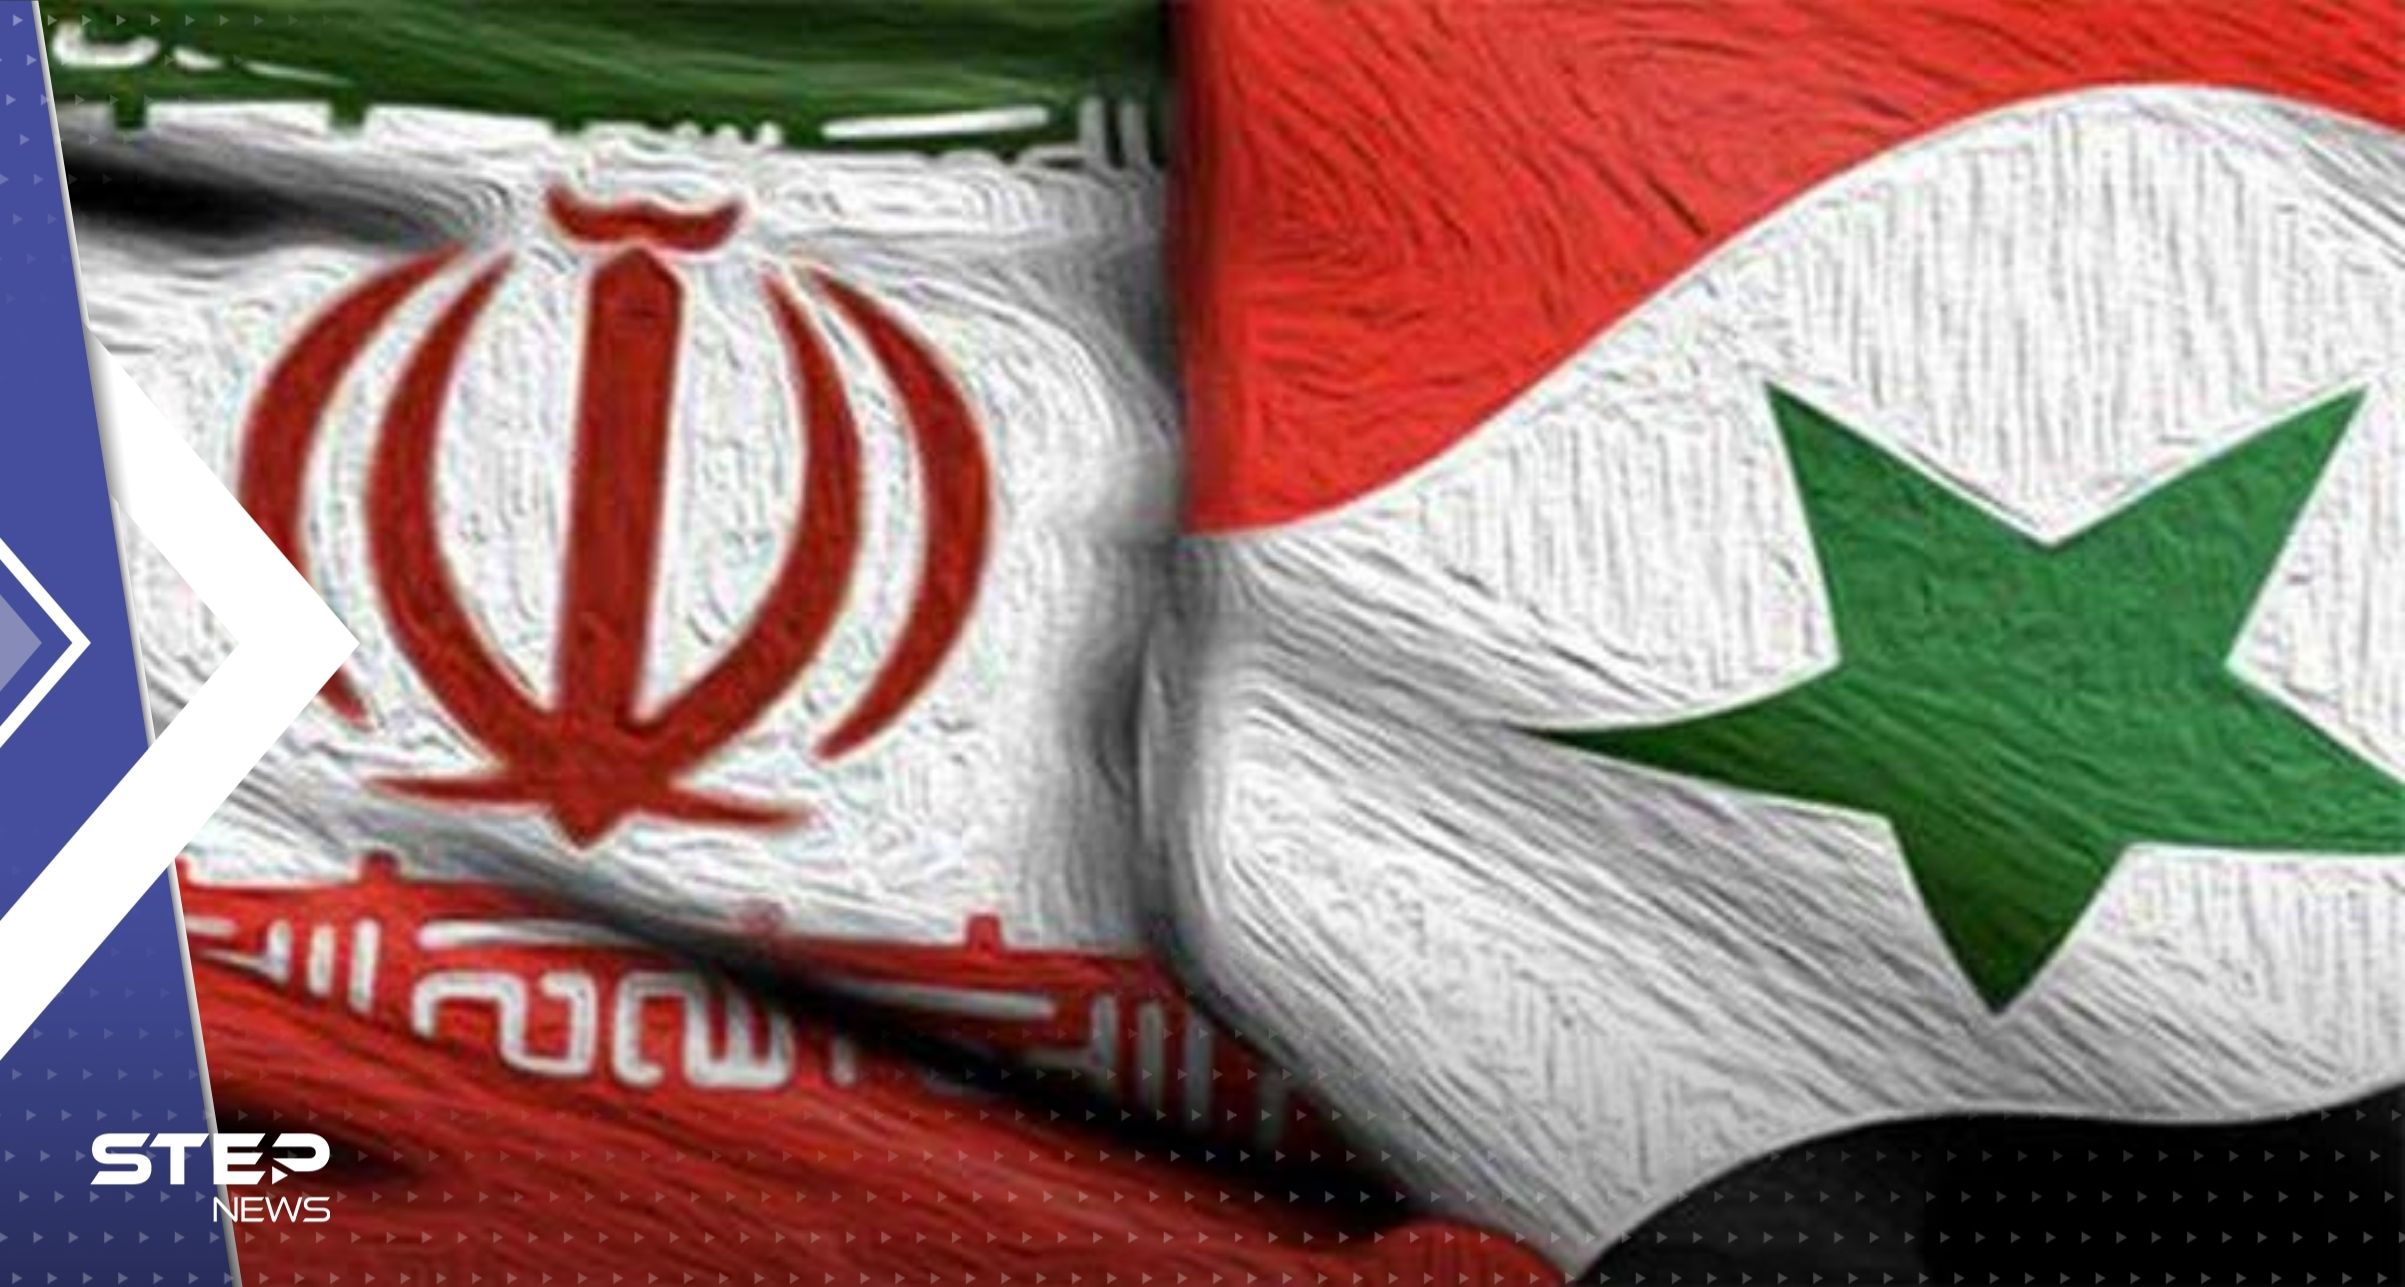 إيران تتخذ "قراراً مهماً" يتعلق بسوريا 